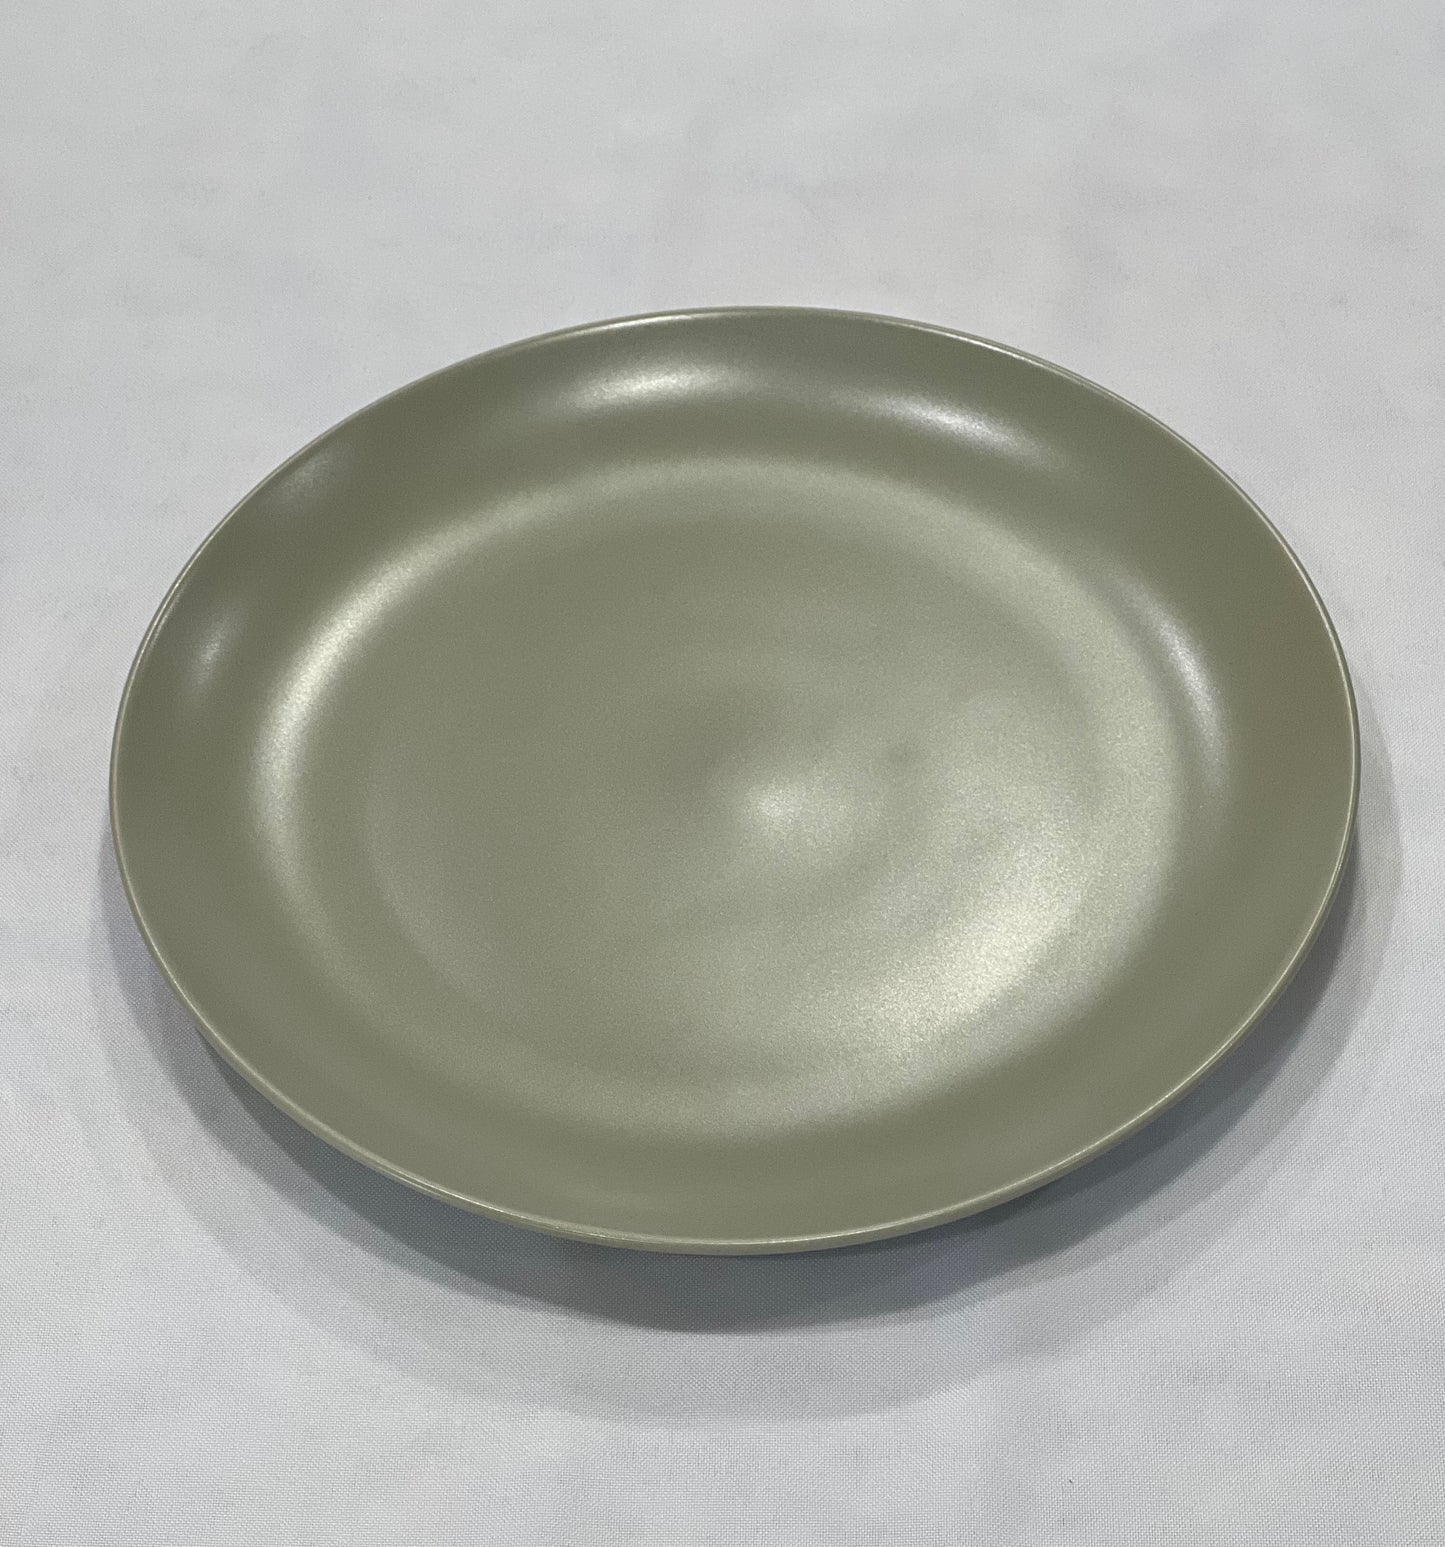 Green Ceramic Plate Rental